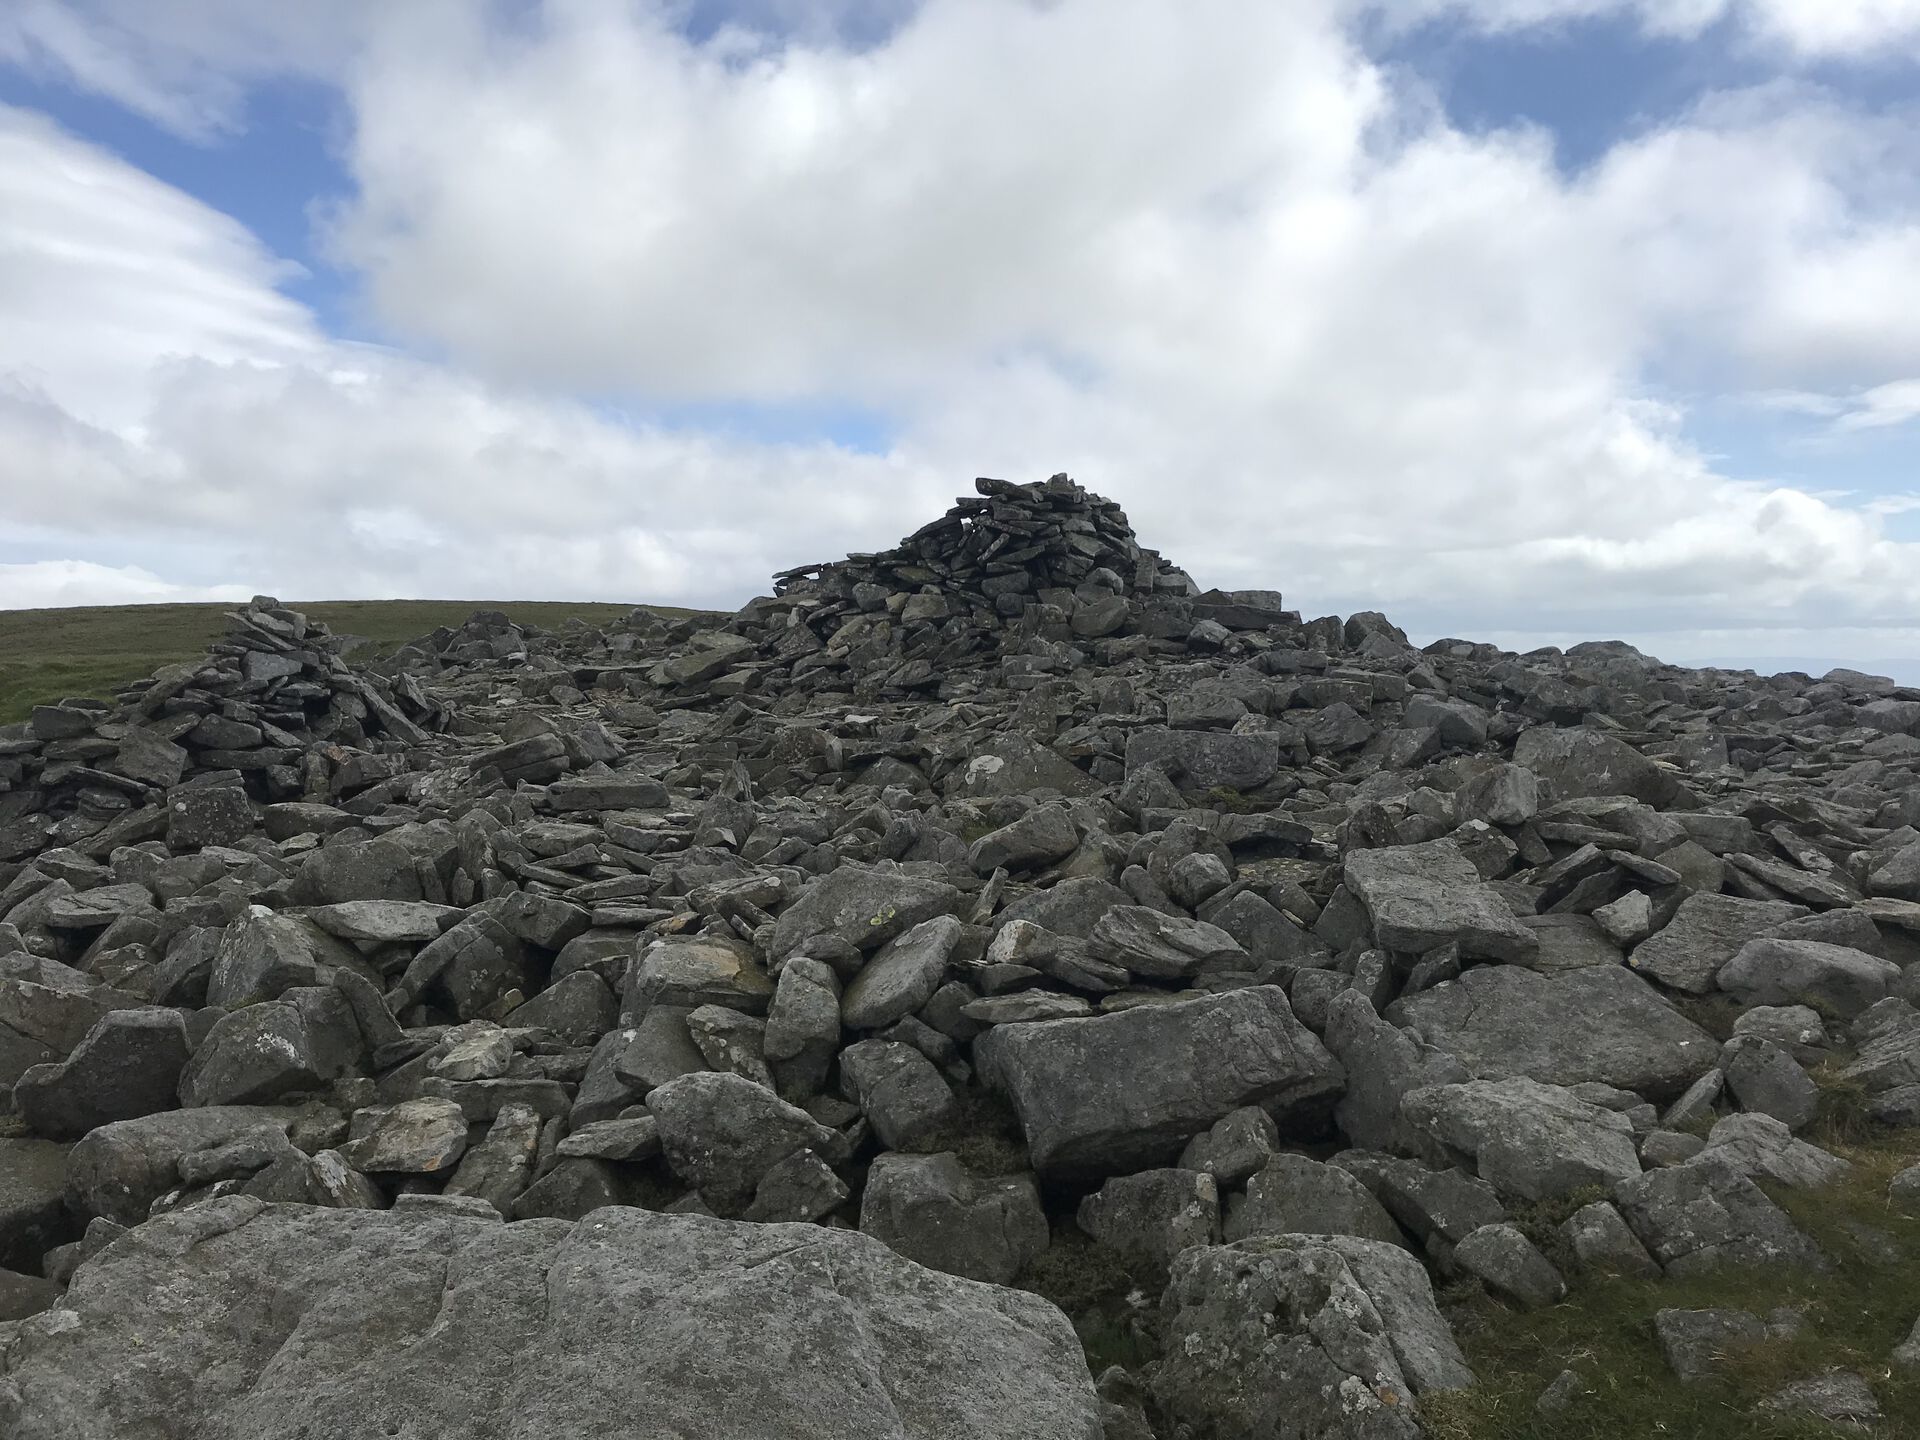 Cairn on the summit of Little Dun Fell